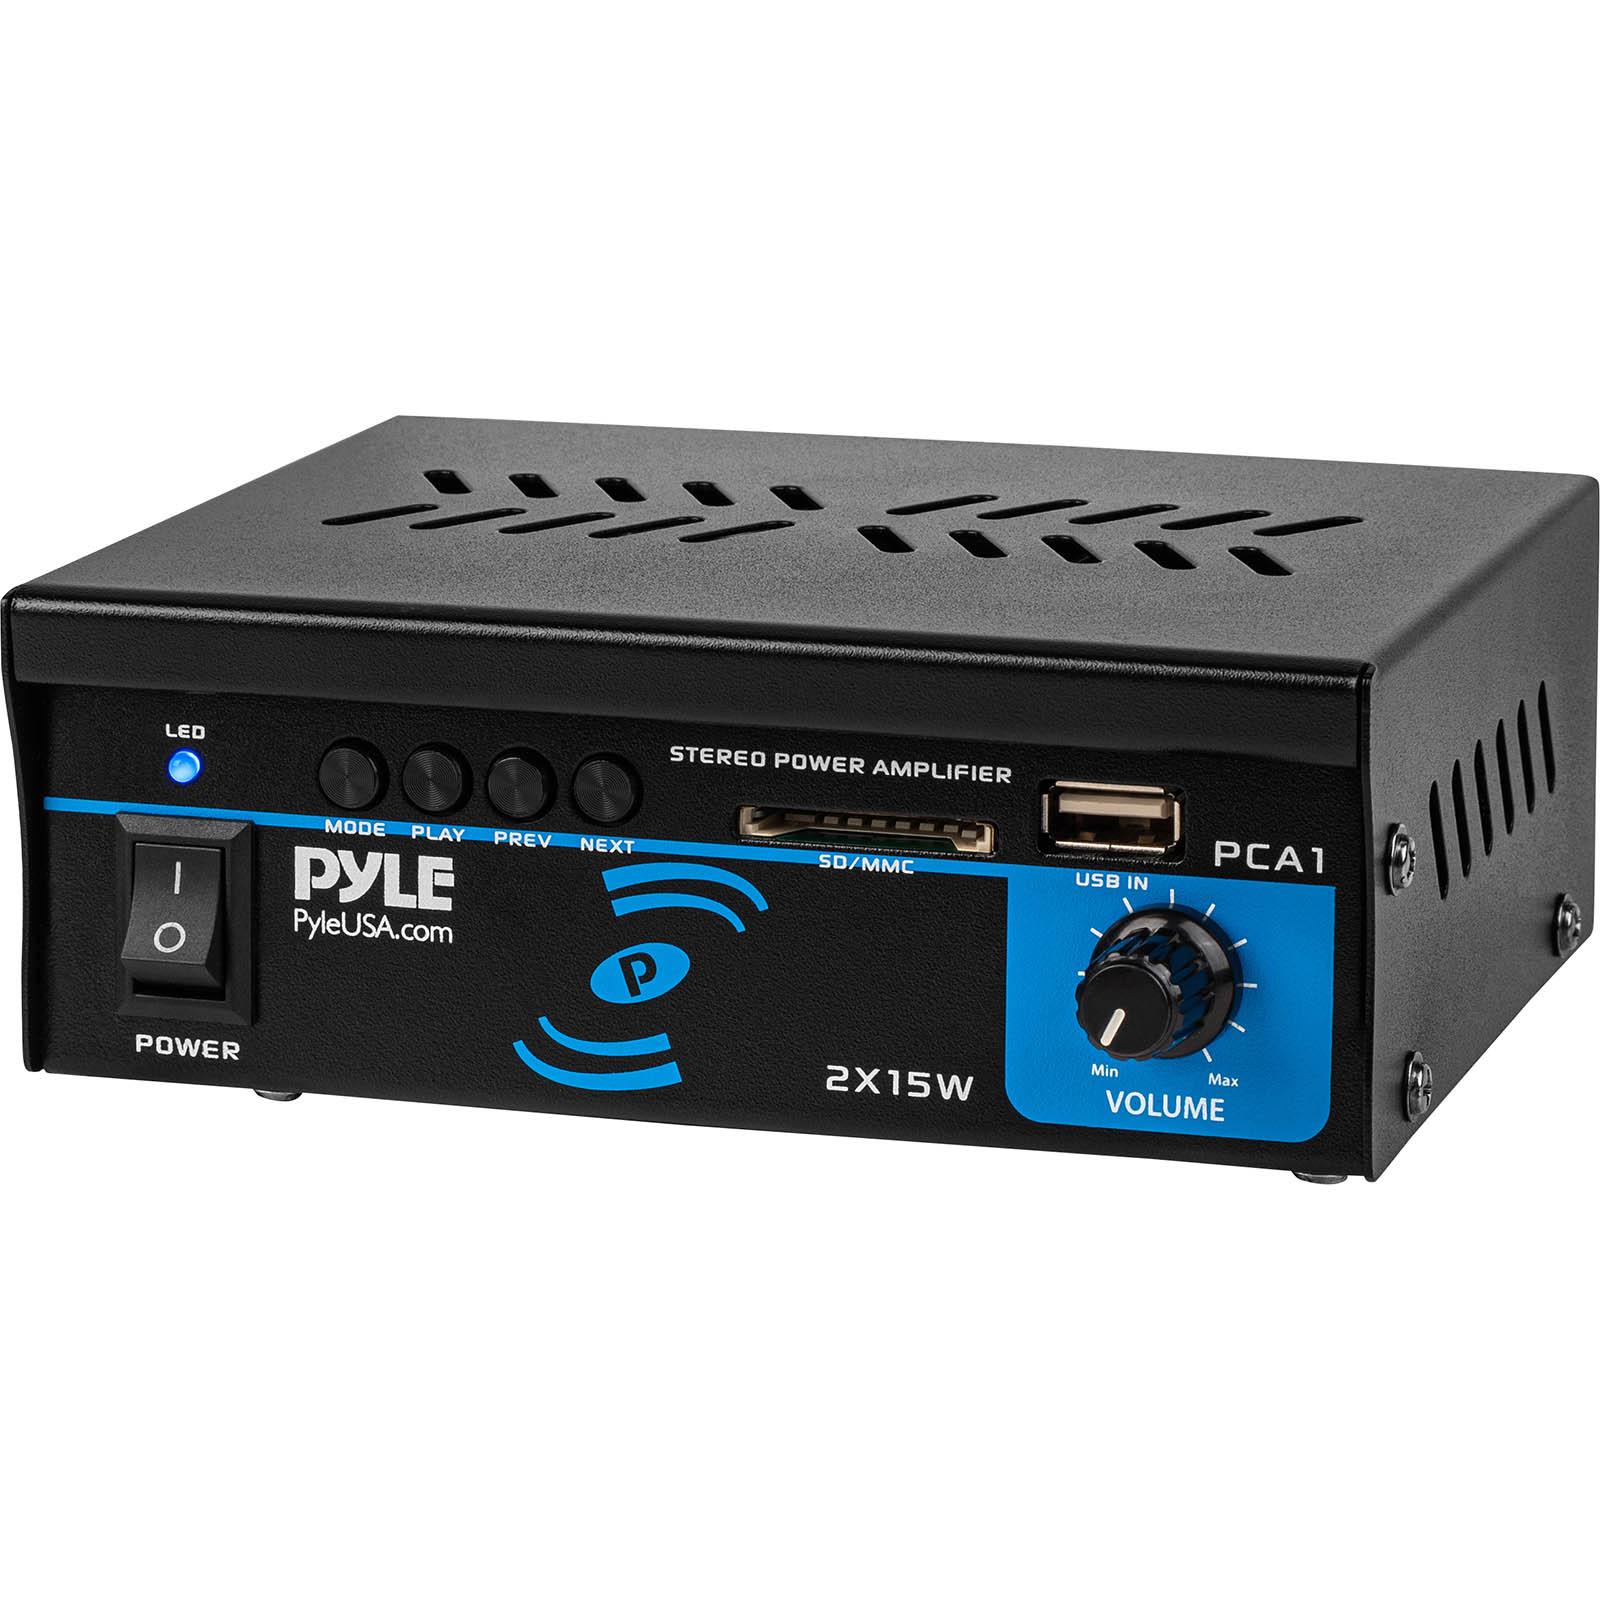 Pyle PCA1 Mini 2x15W Stereo Power Amplifier 